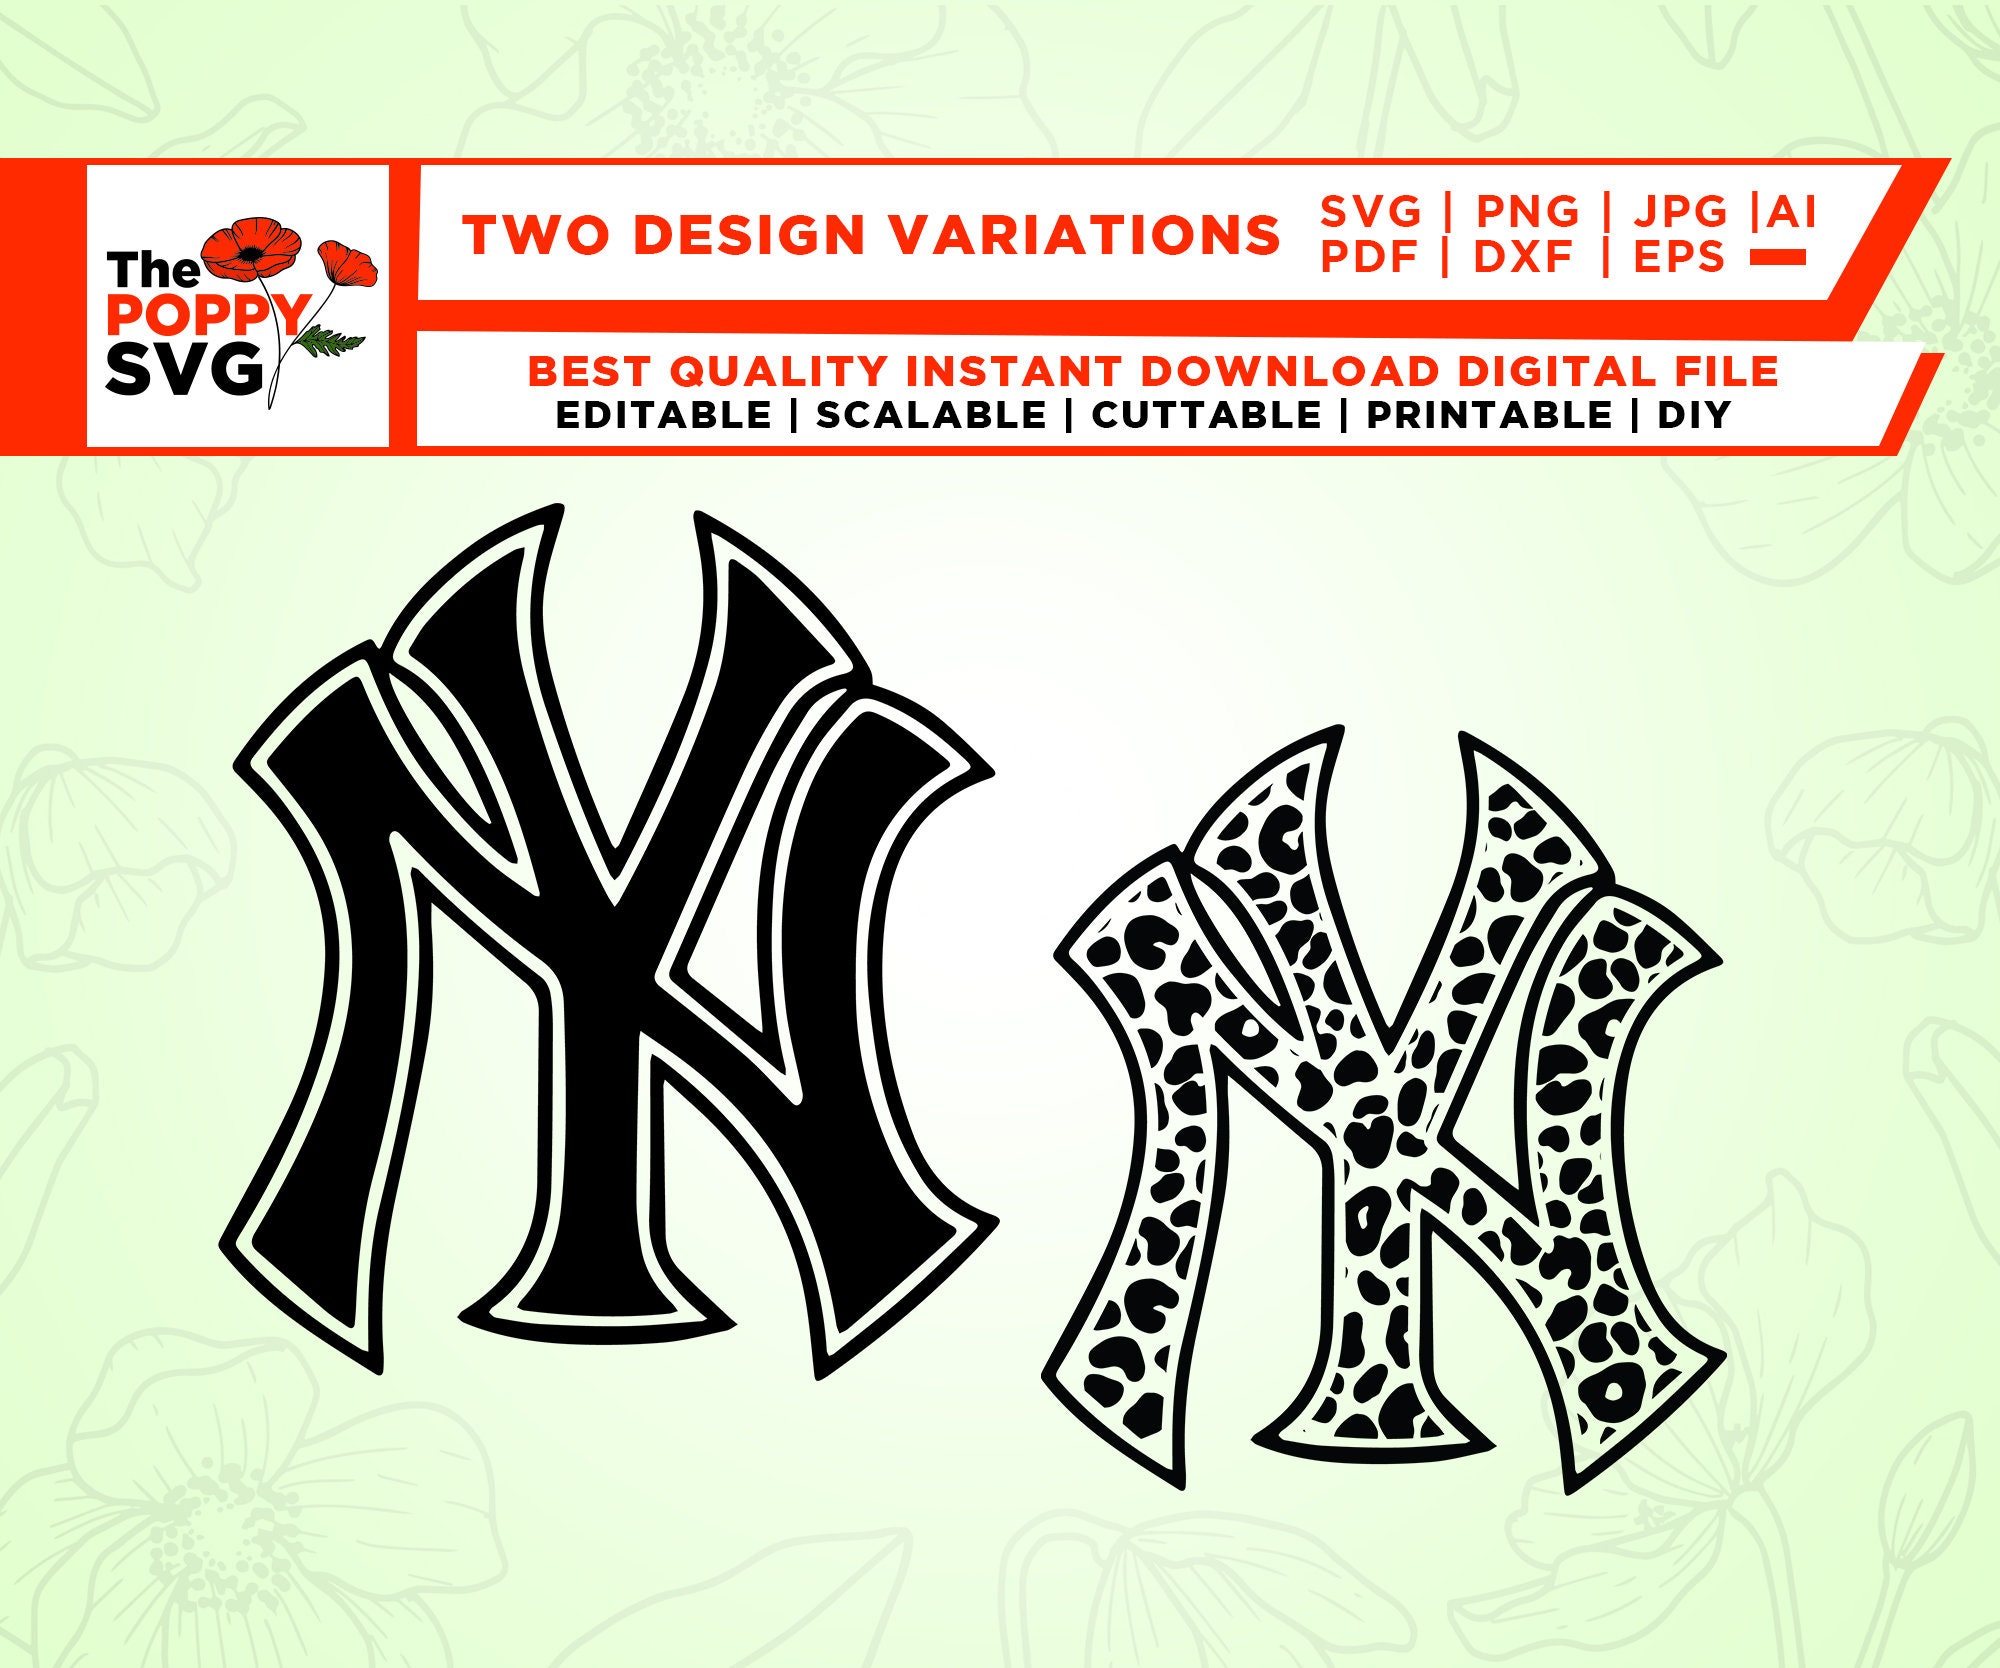 NewYork Yankees SVG Bundle - Designerpick